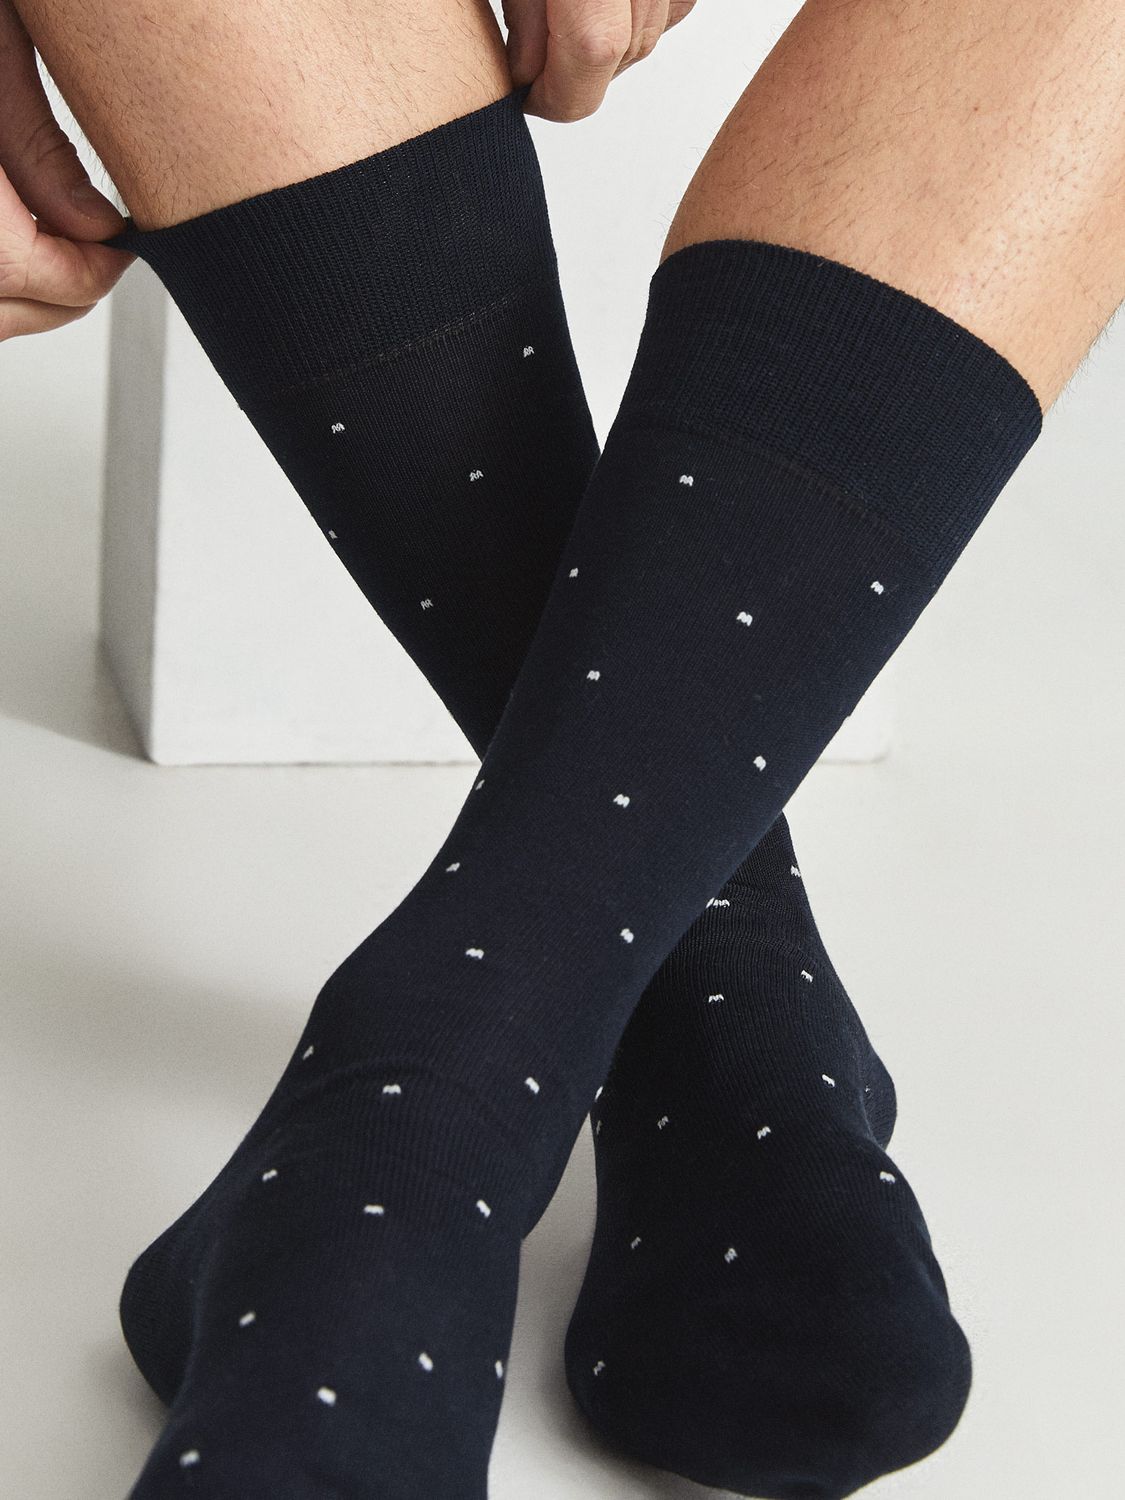 Reiss Mario Polka Dot Print Cotton Blend Socks, Navy, S-M